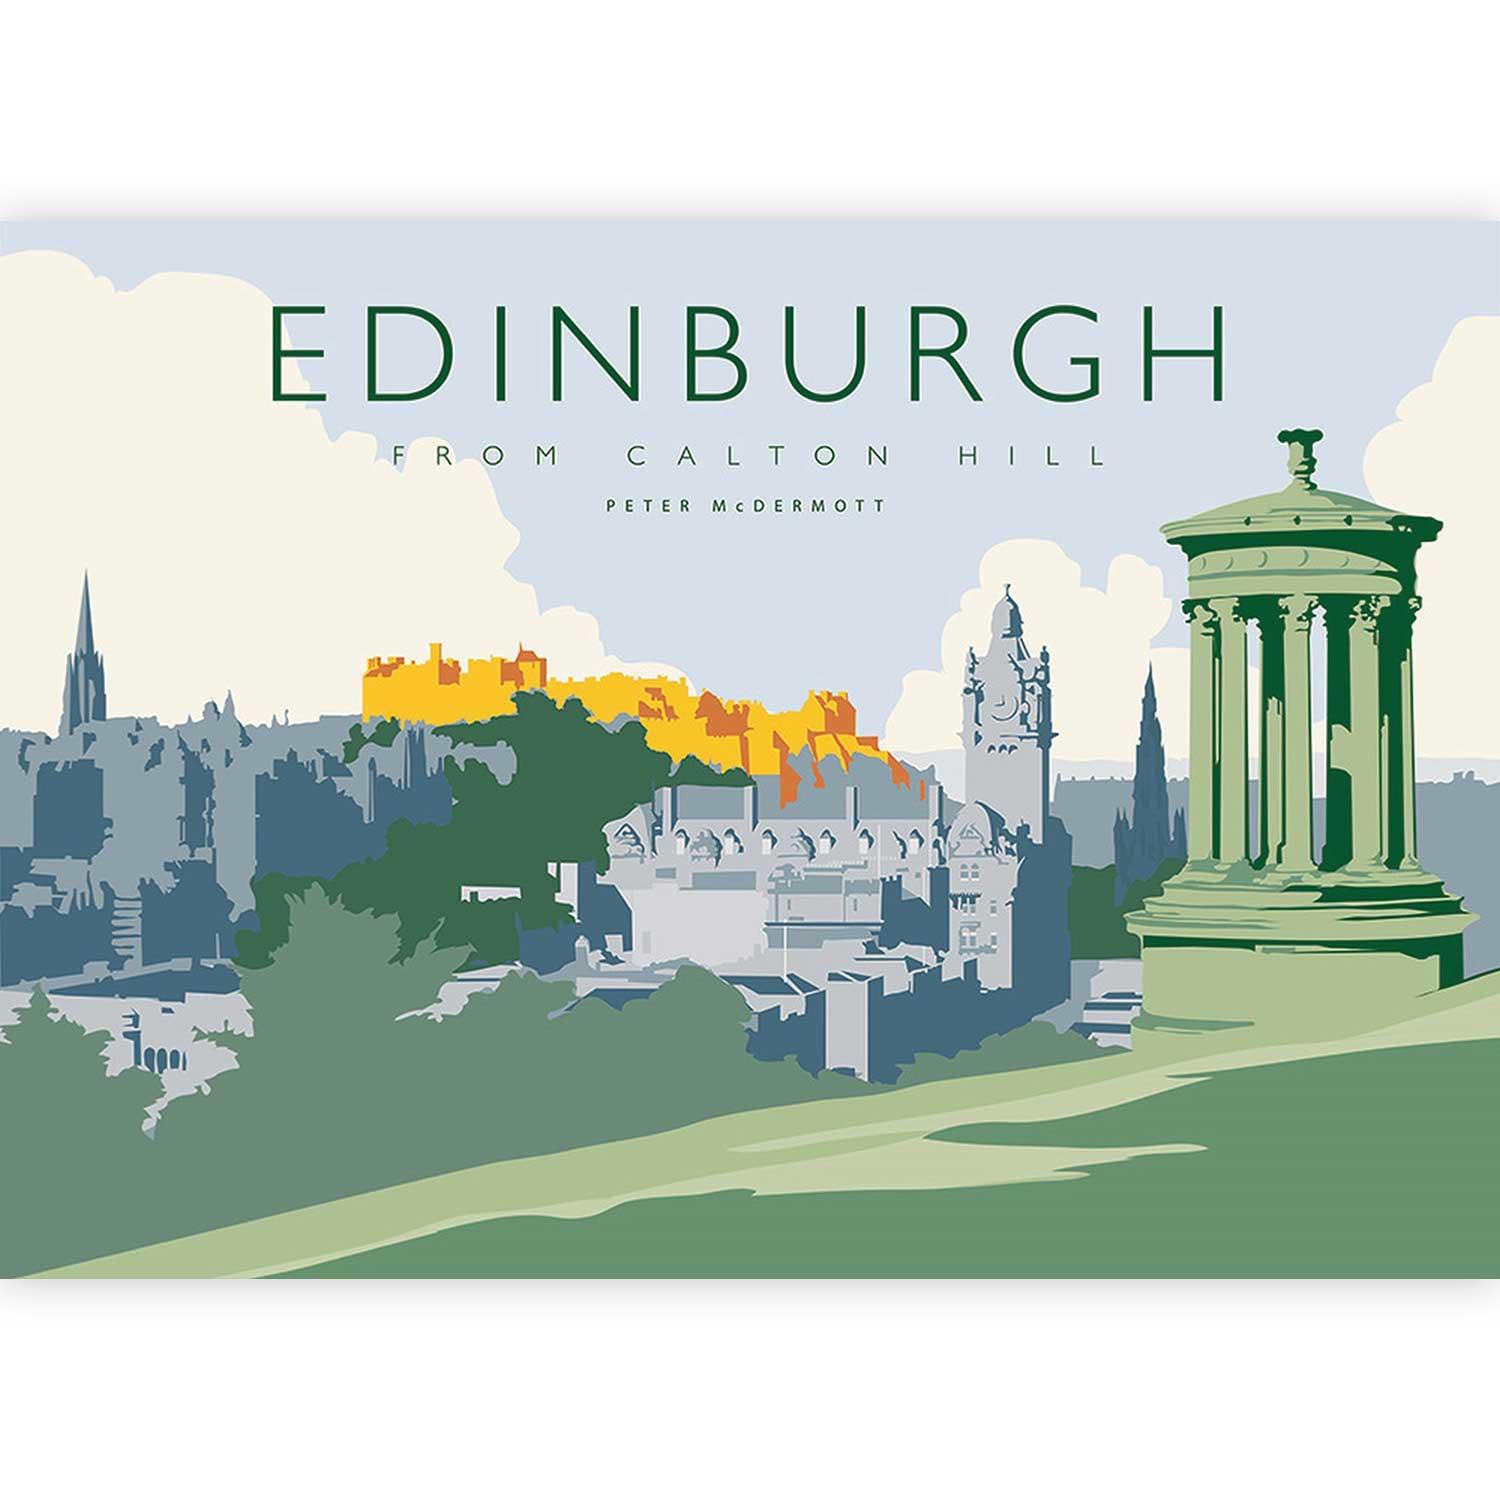 Edinburgh from Calton Hill by Peter McDermott